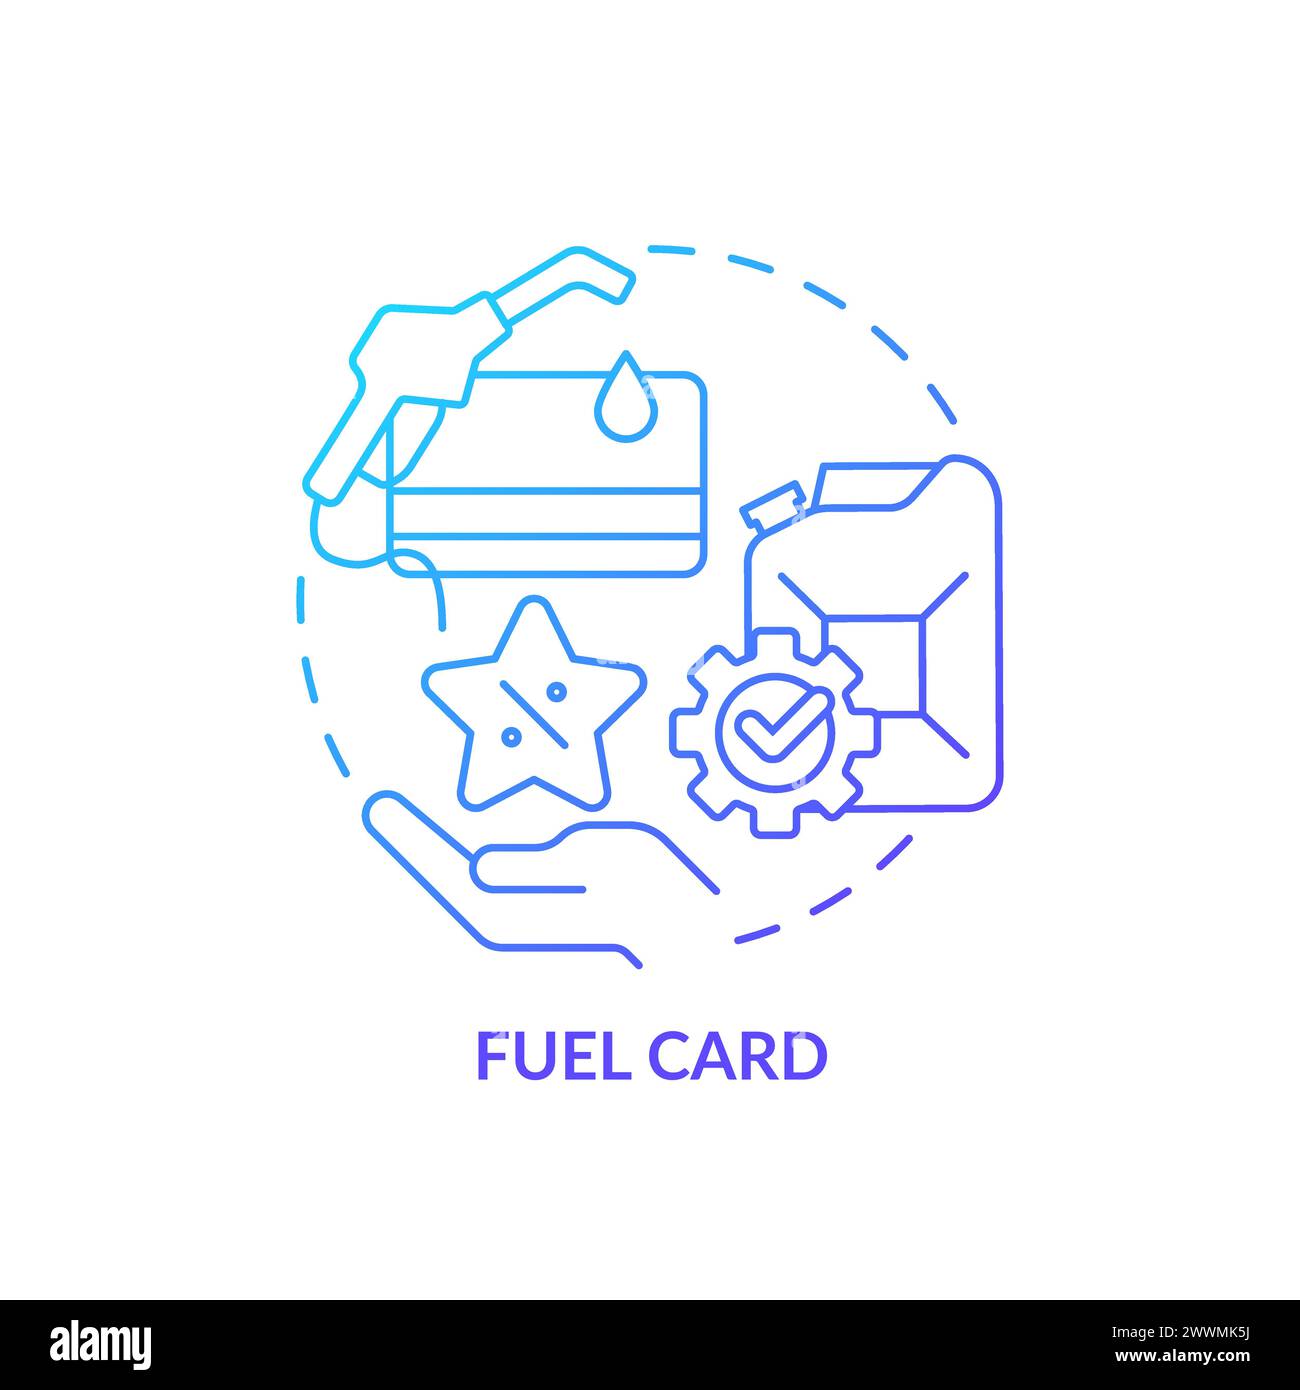 Fuel card blue gradient concept icon Stock Vector